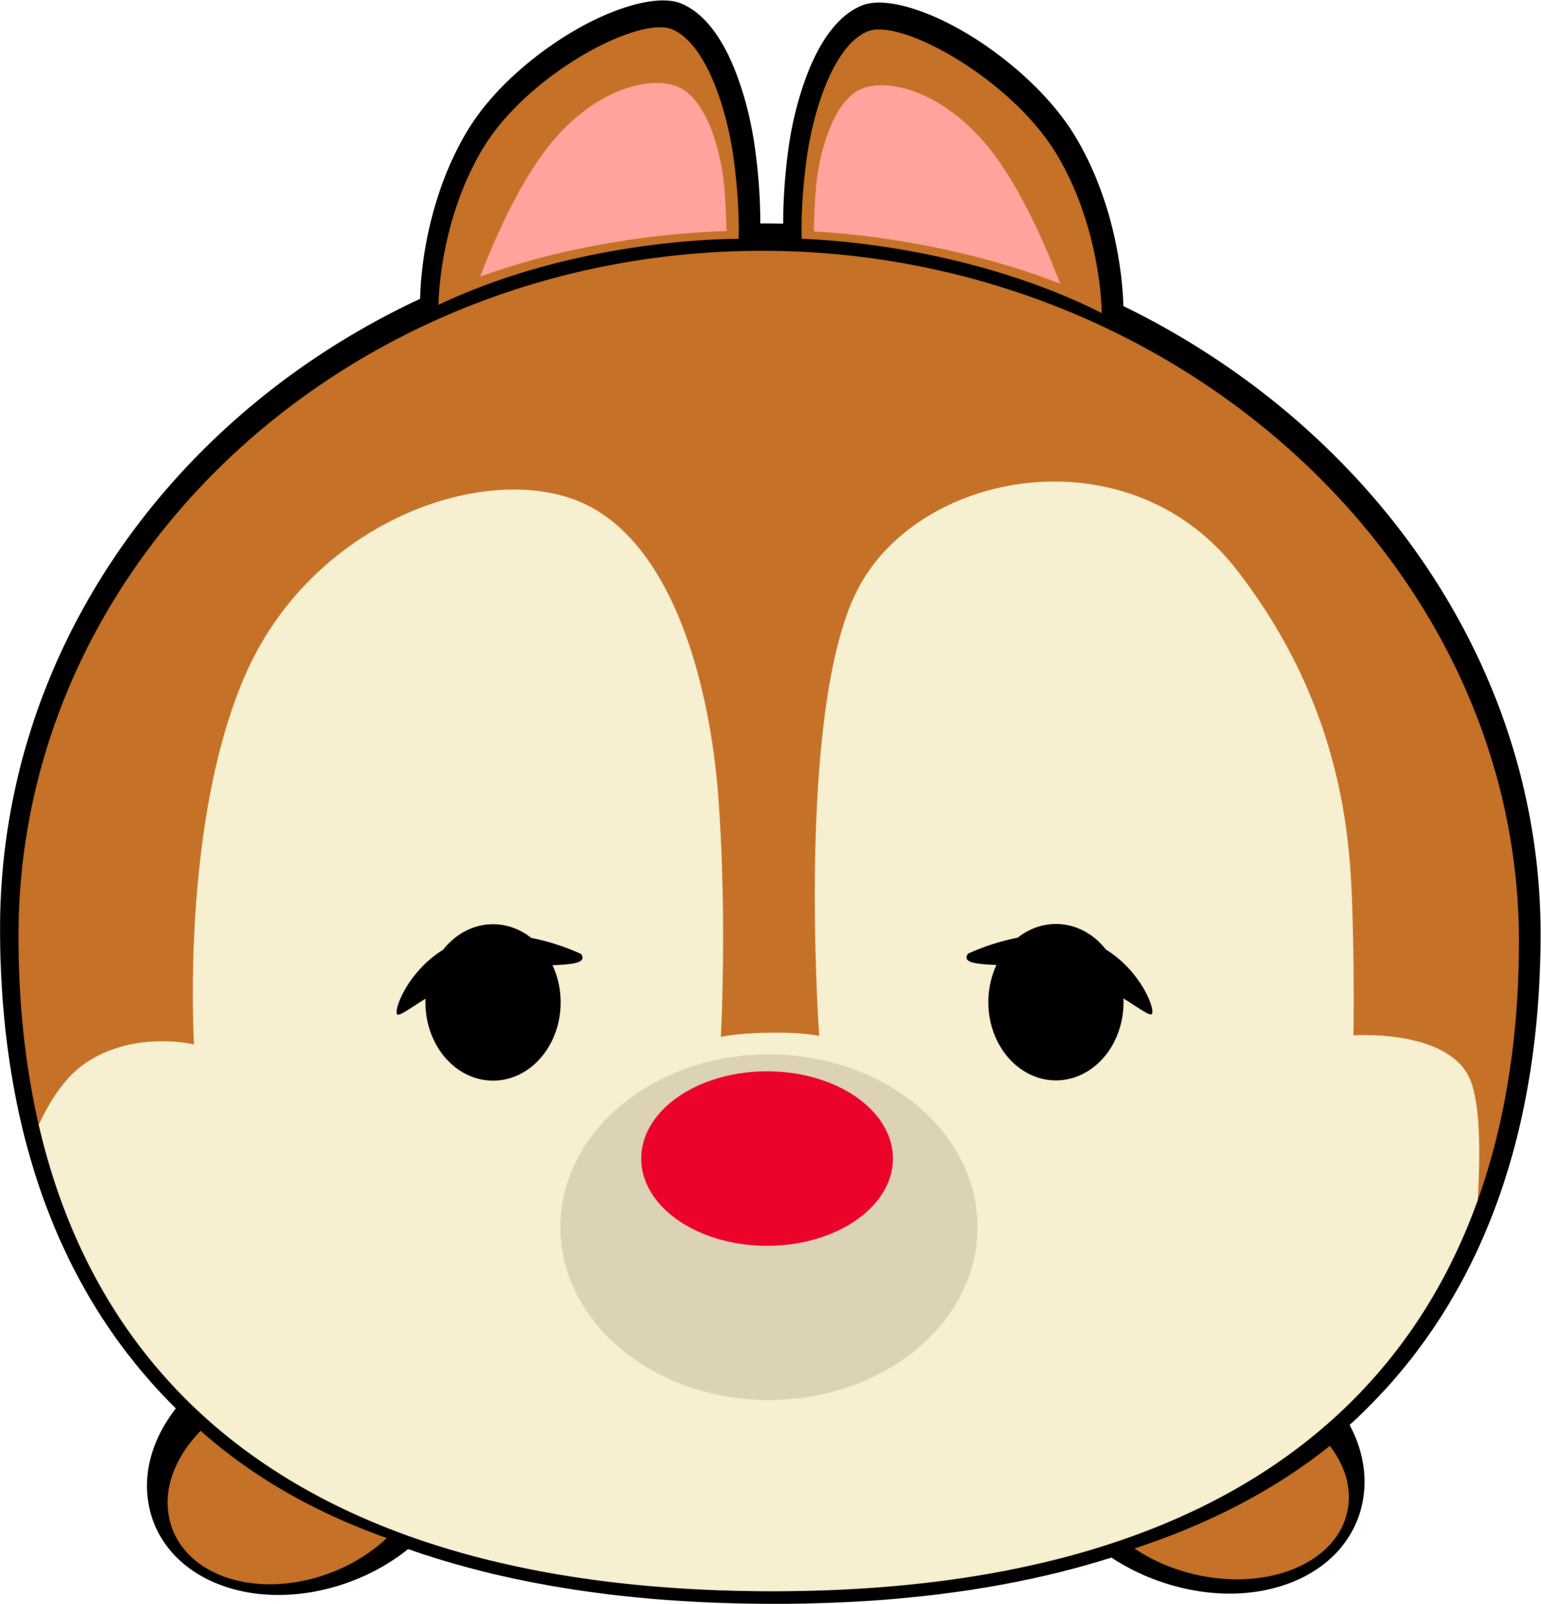 Disney Tsum Tsum Clipart - Png Download (1541x1604), Png Download